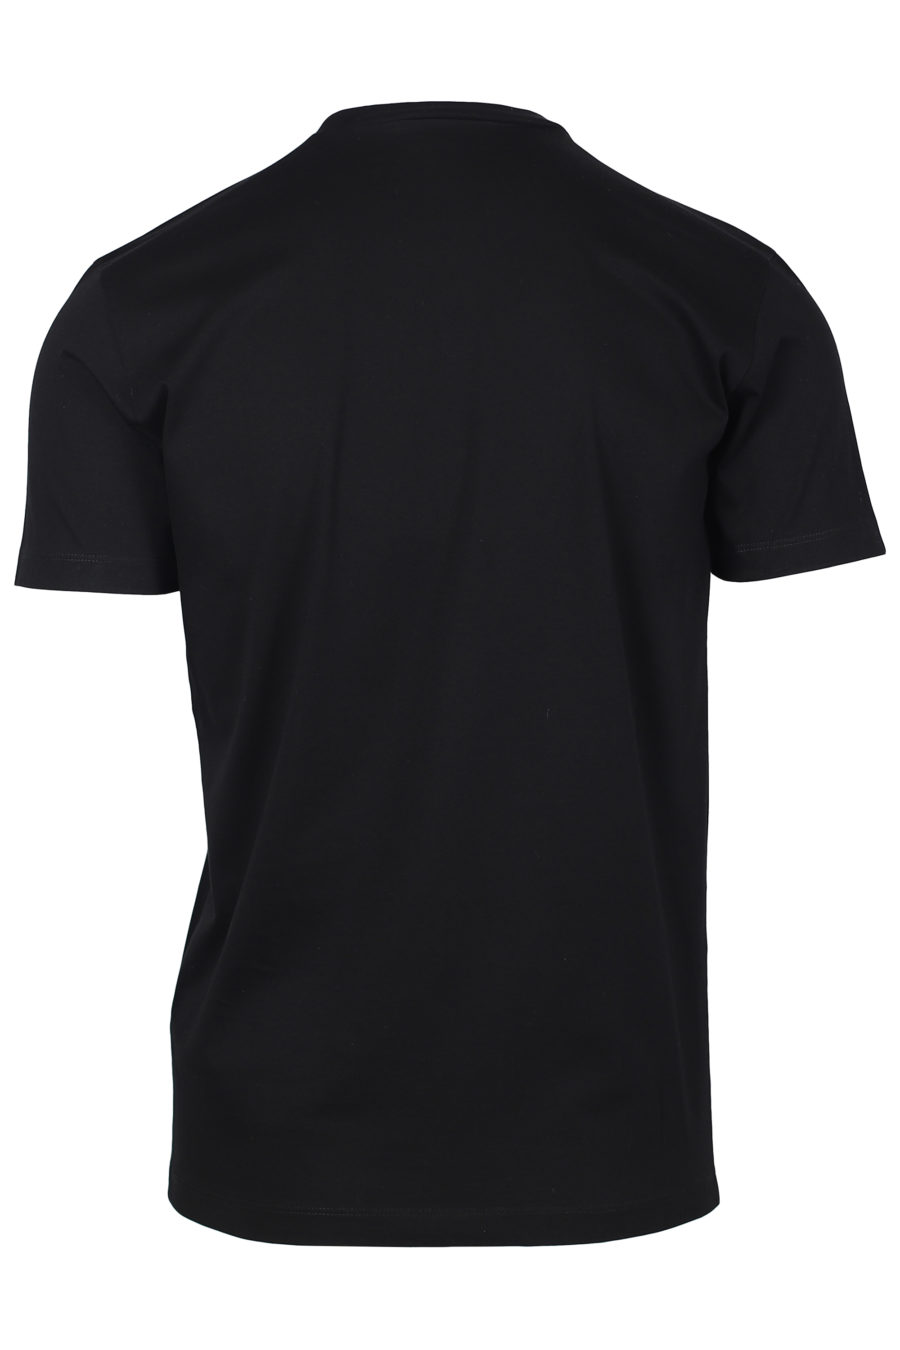 T-shirt preta com o logótipo "Doodle Face" - IMG 2254 1